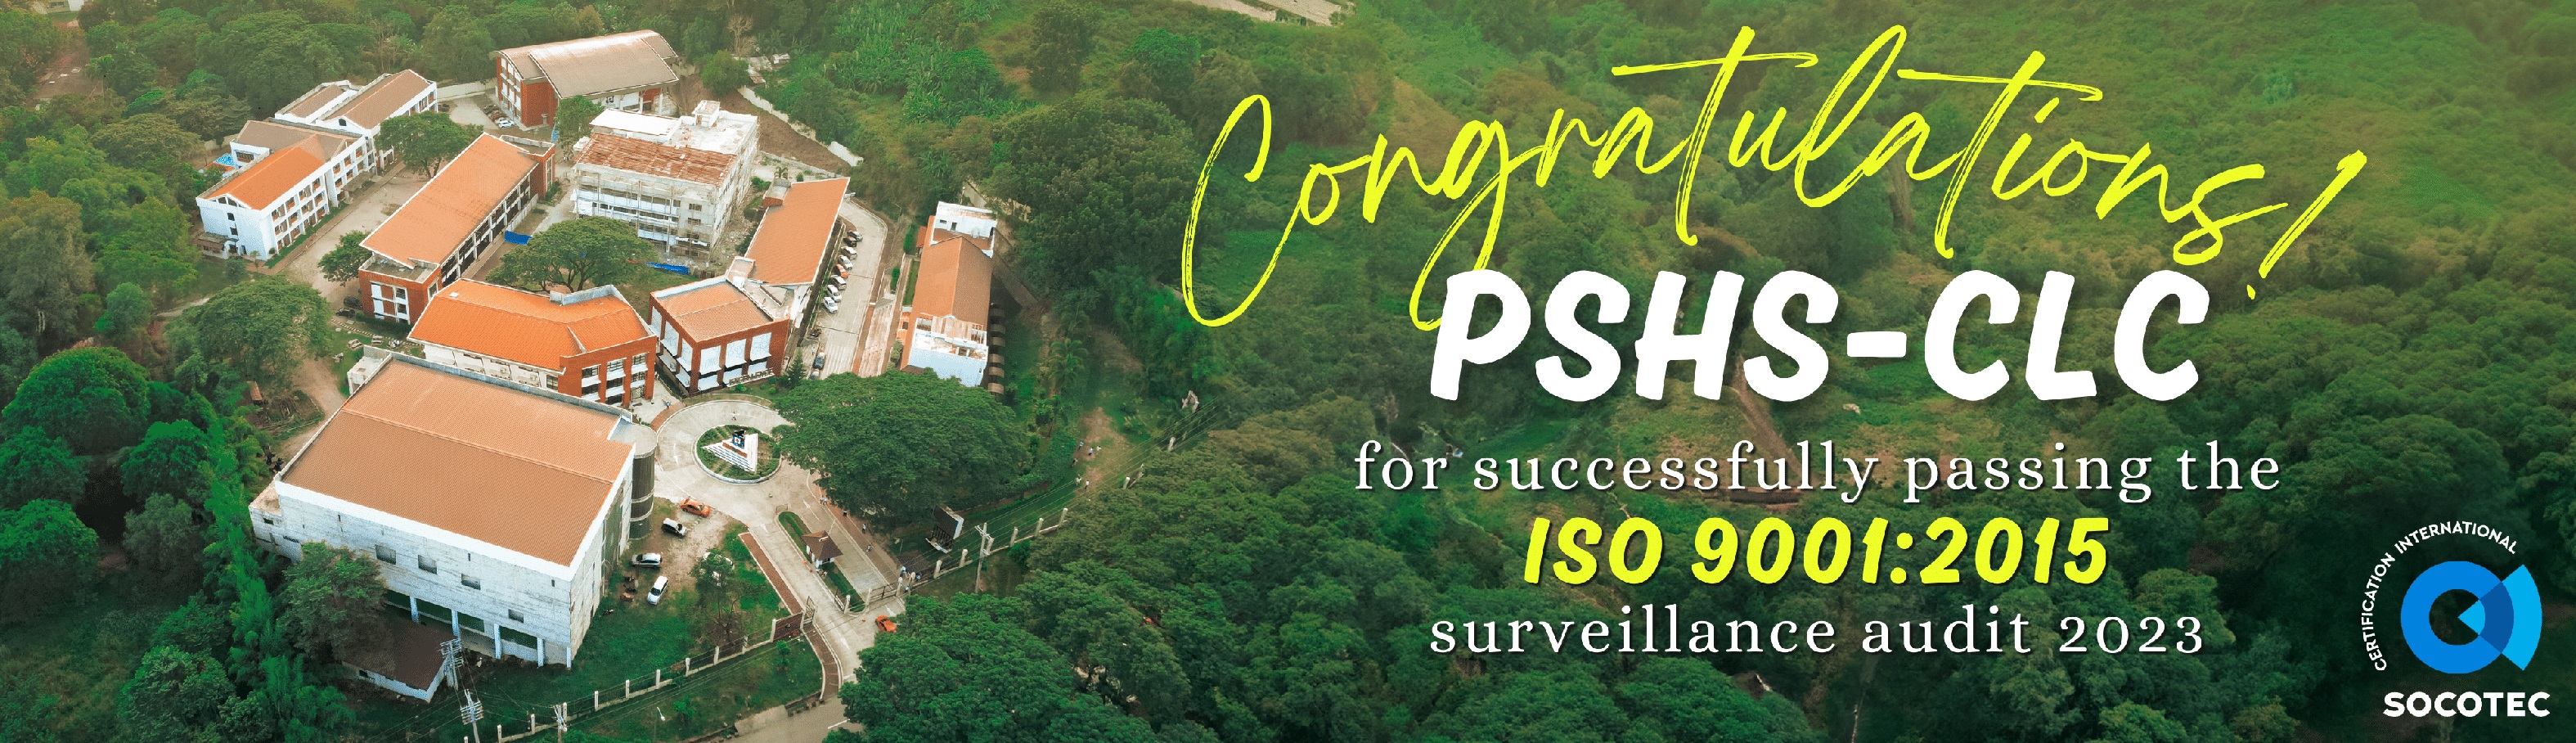 Congrats PSHS CLC - ISO9001